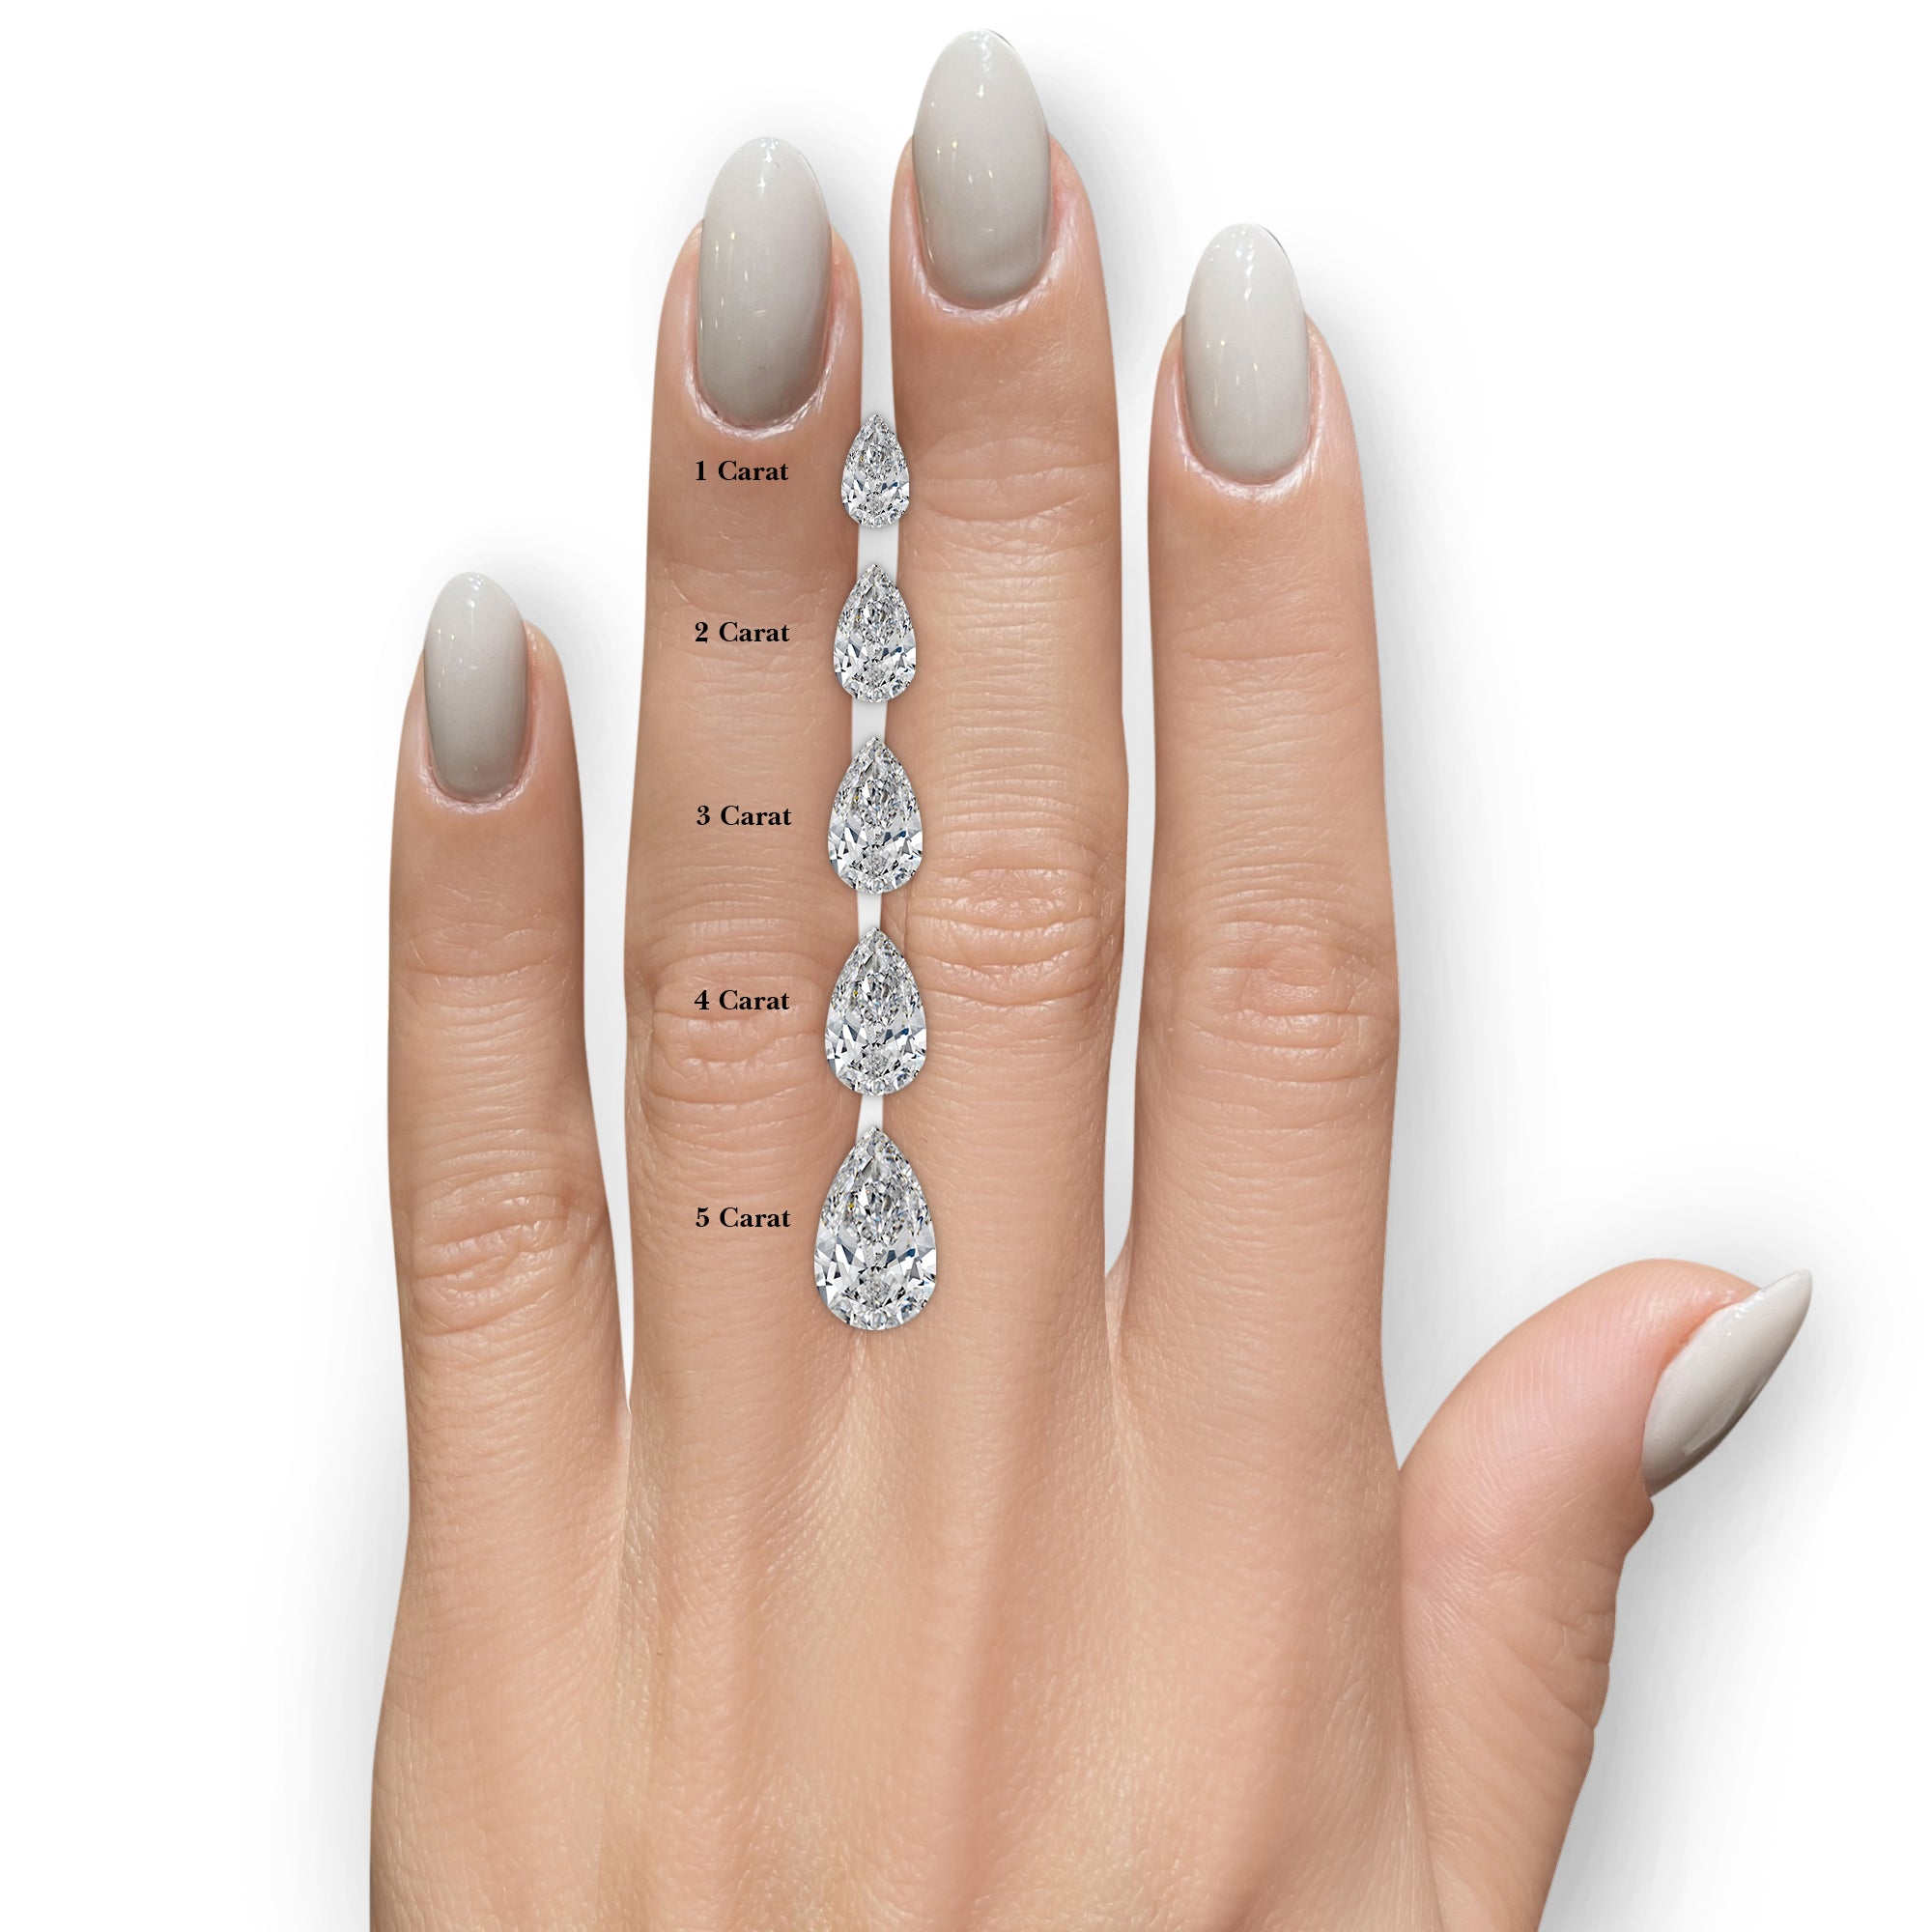 Sophia Lab Grown Diamond Ring -14K White Gold